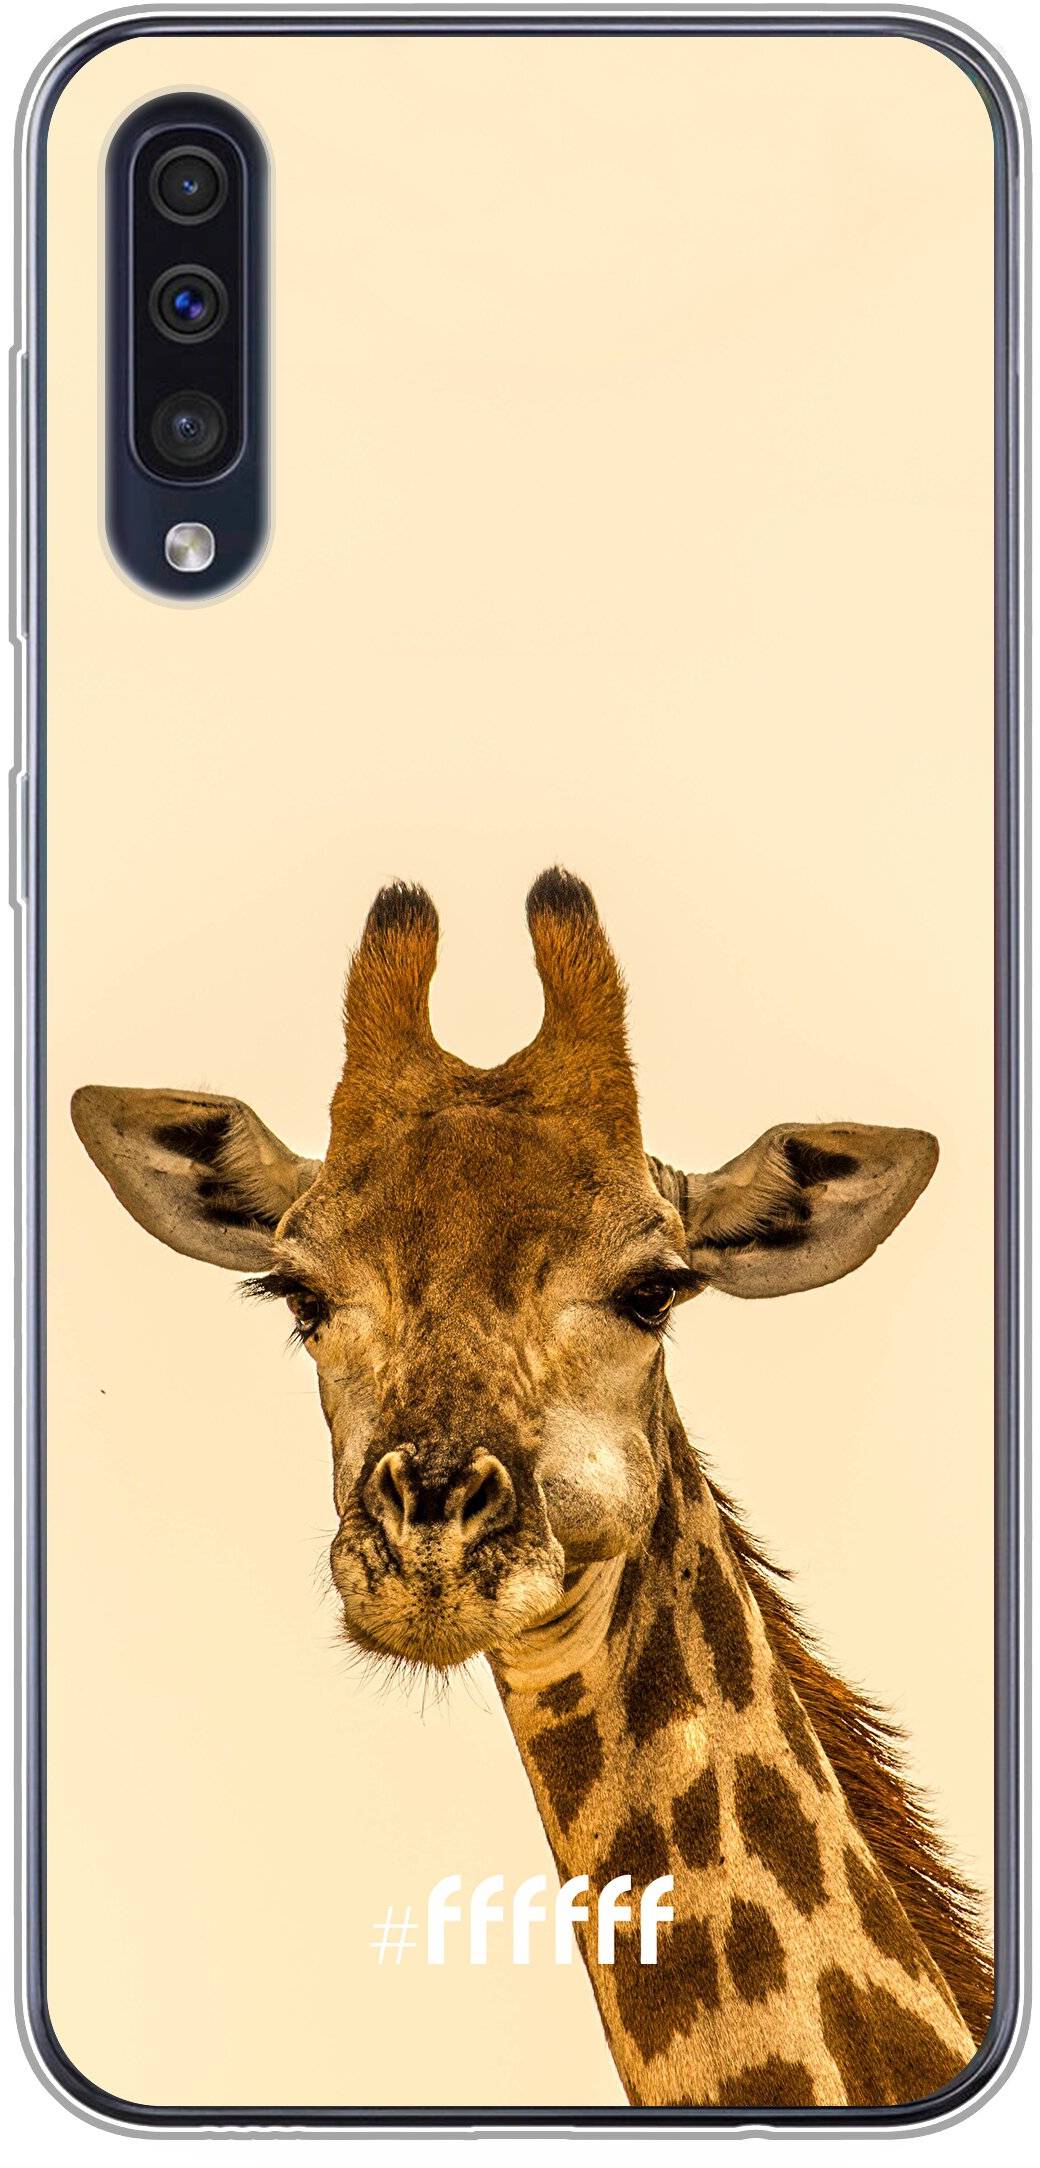 Giraffe Galaxy A50s